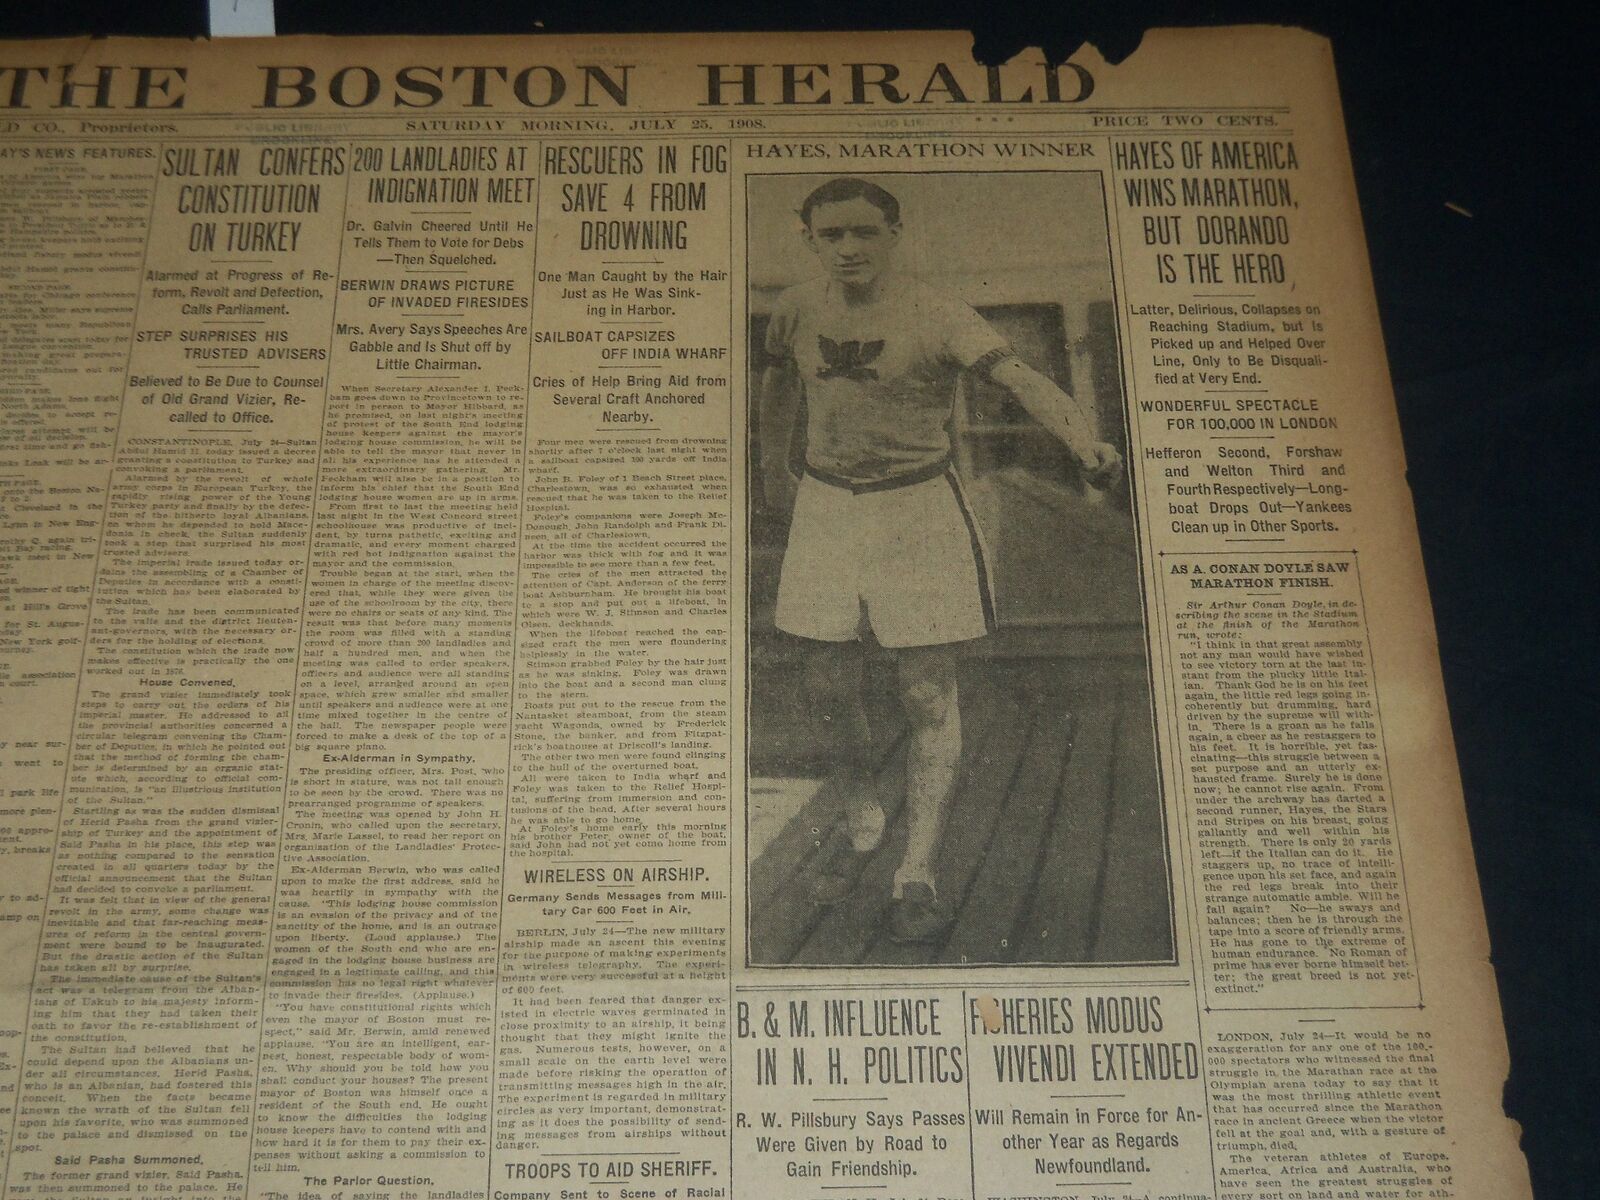 1908 JULY 25 THE BOSTON HERALD - HAYES OF AMERICA WINS MARATHON - BH 323